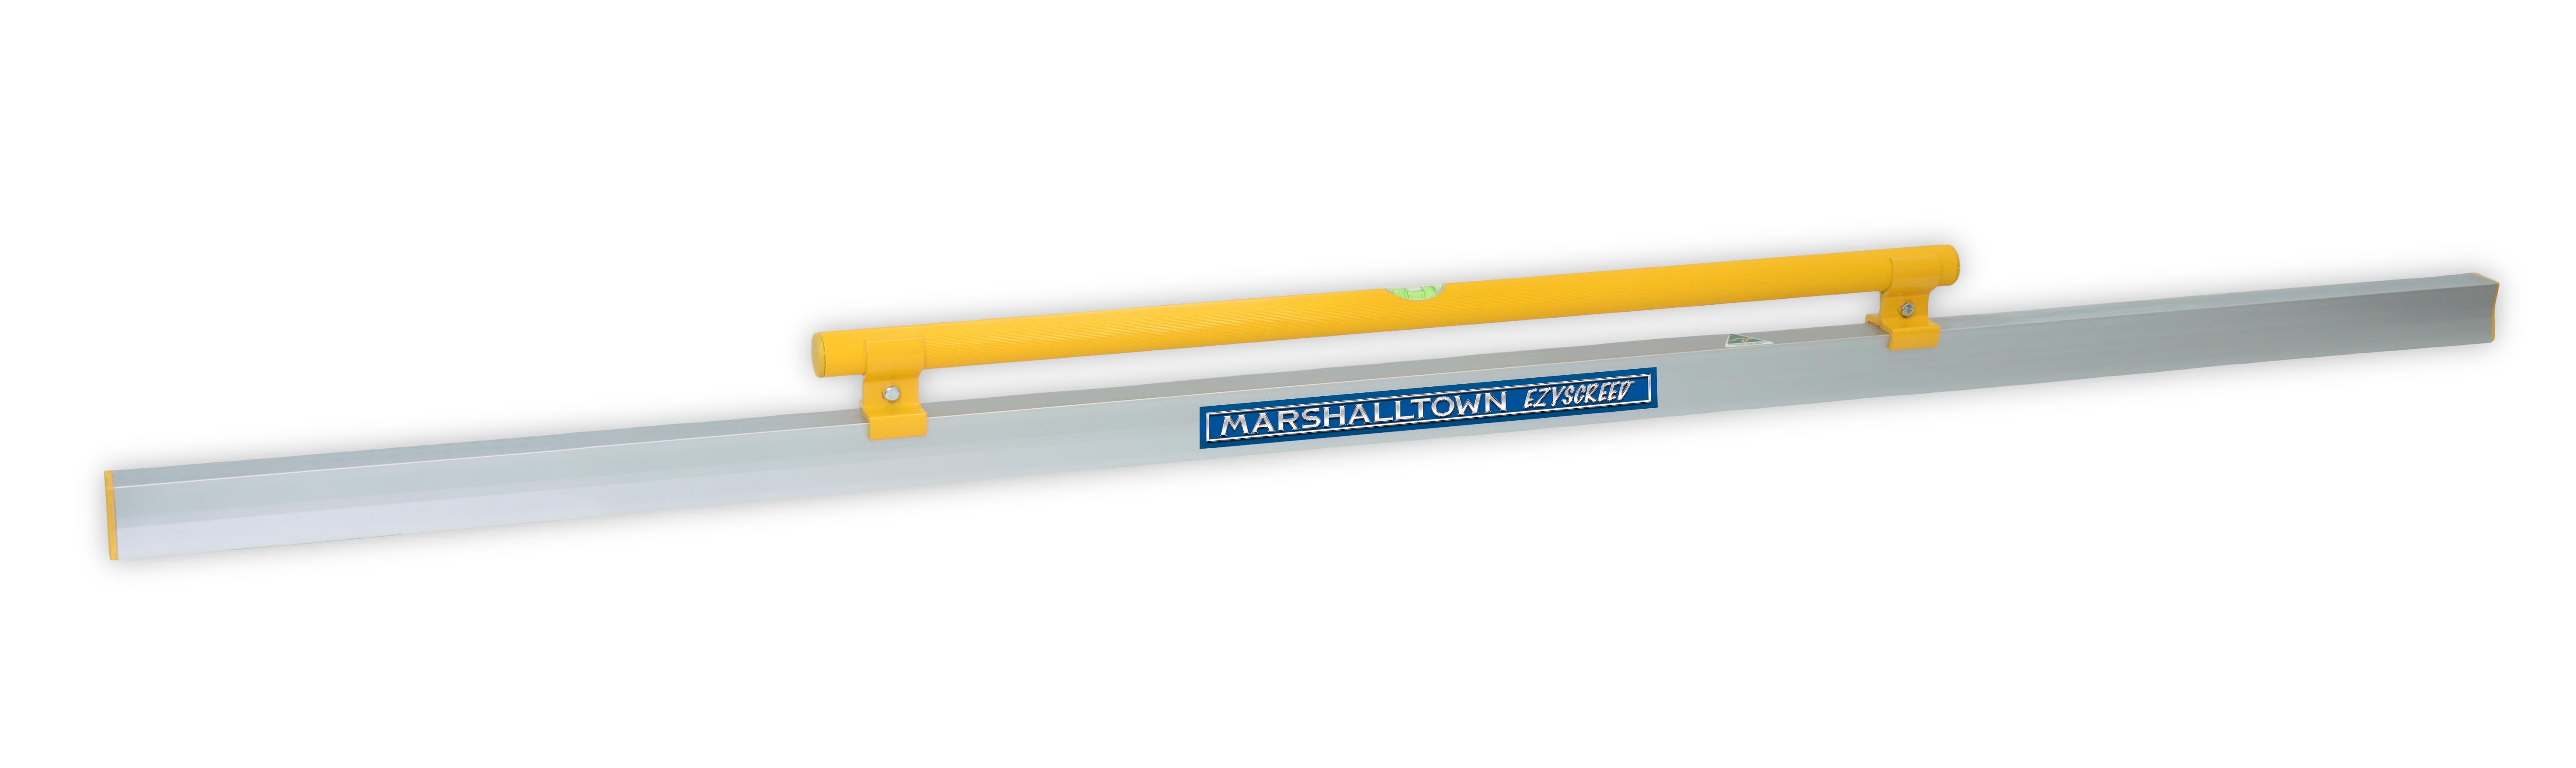 Marshalltown (28402) product